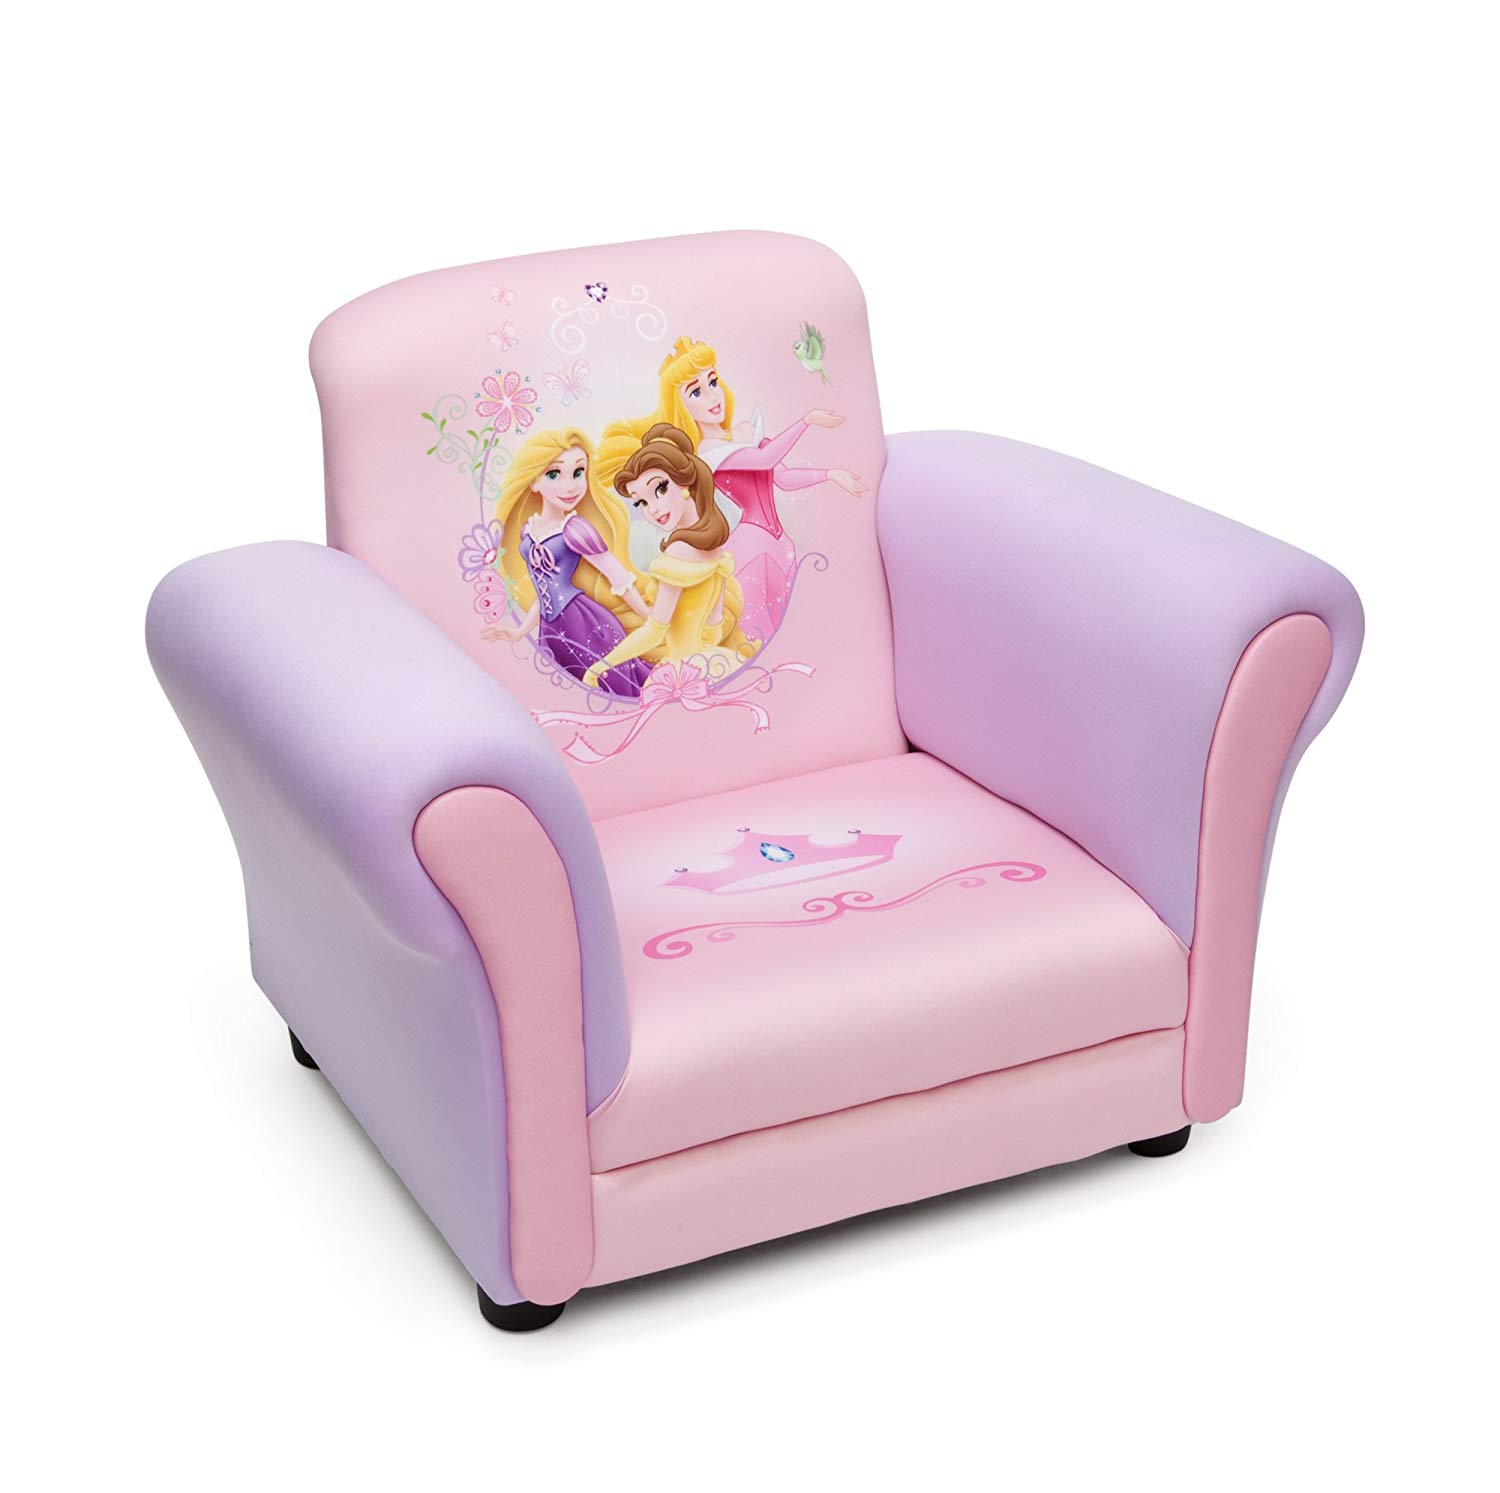 Simple Disney Princess Beach Chair for Simple Design